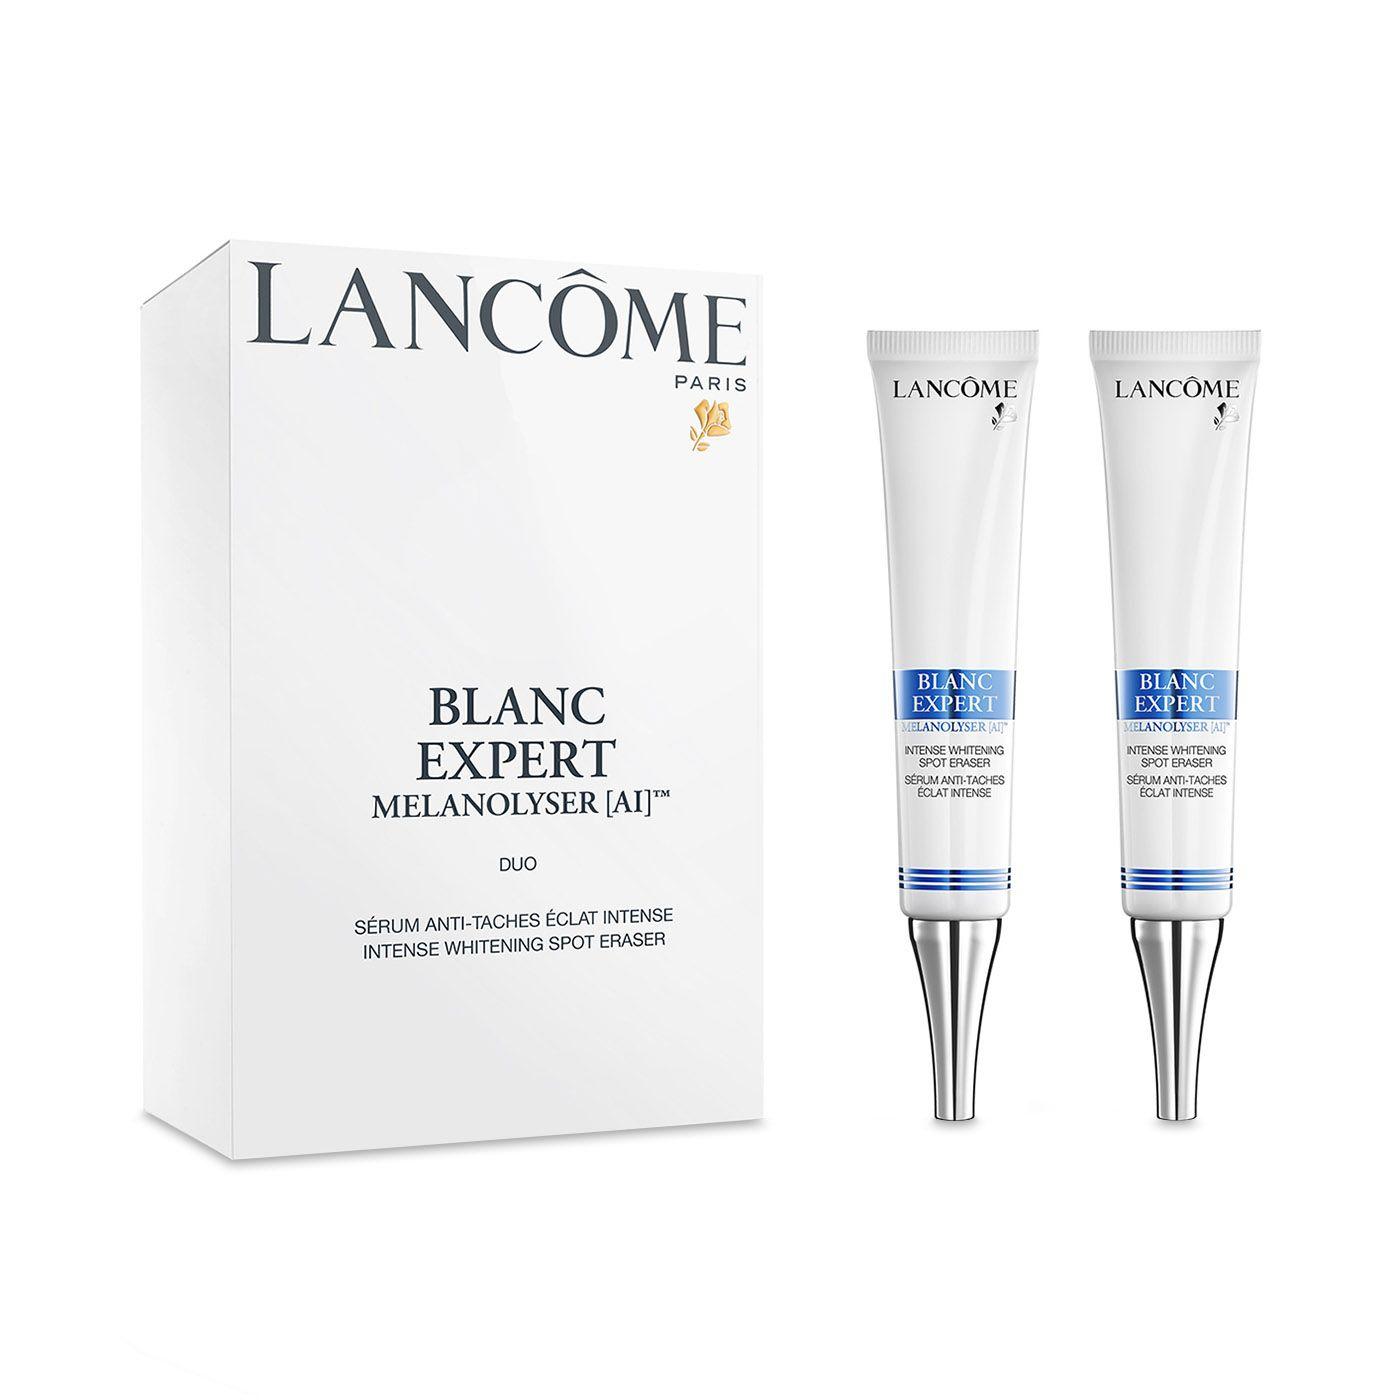 Lancome Paris Logo - Kingpower Exclusive Skincare